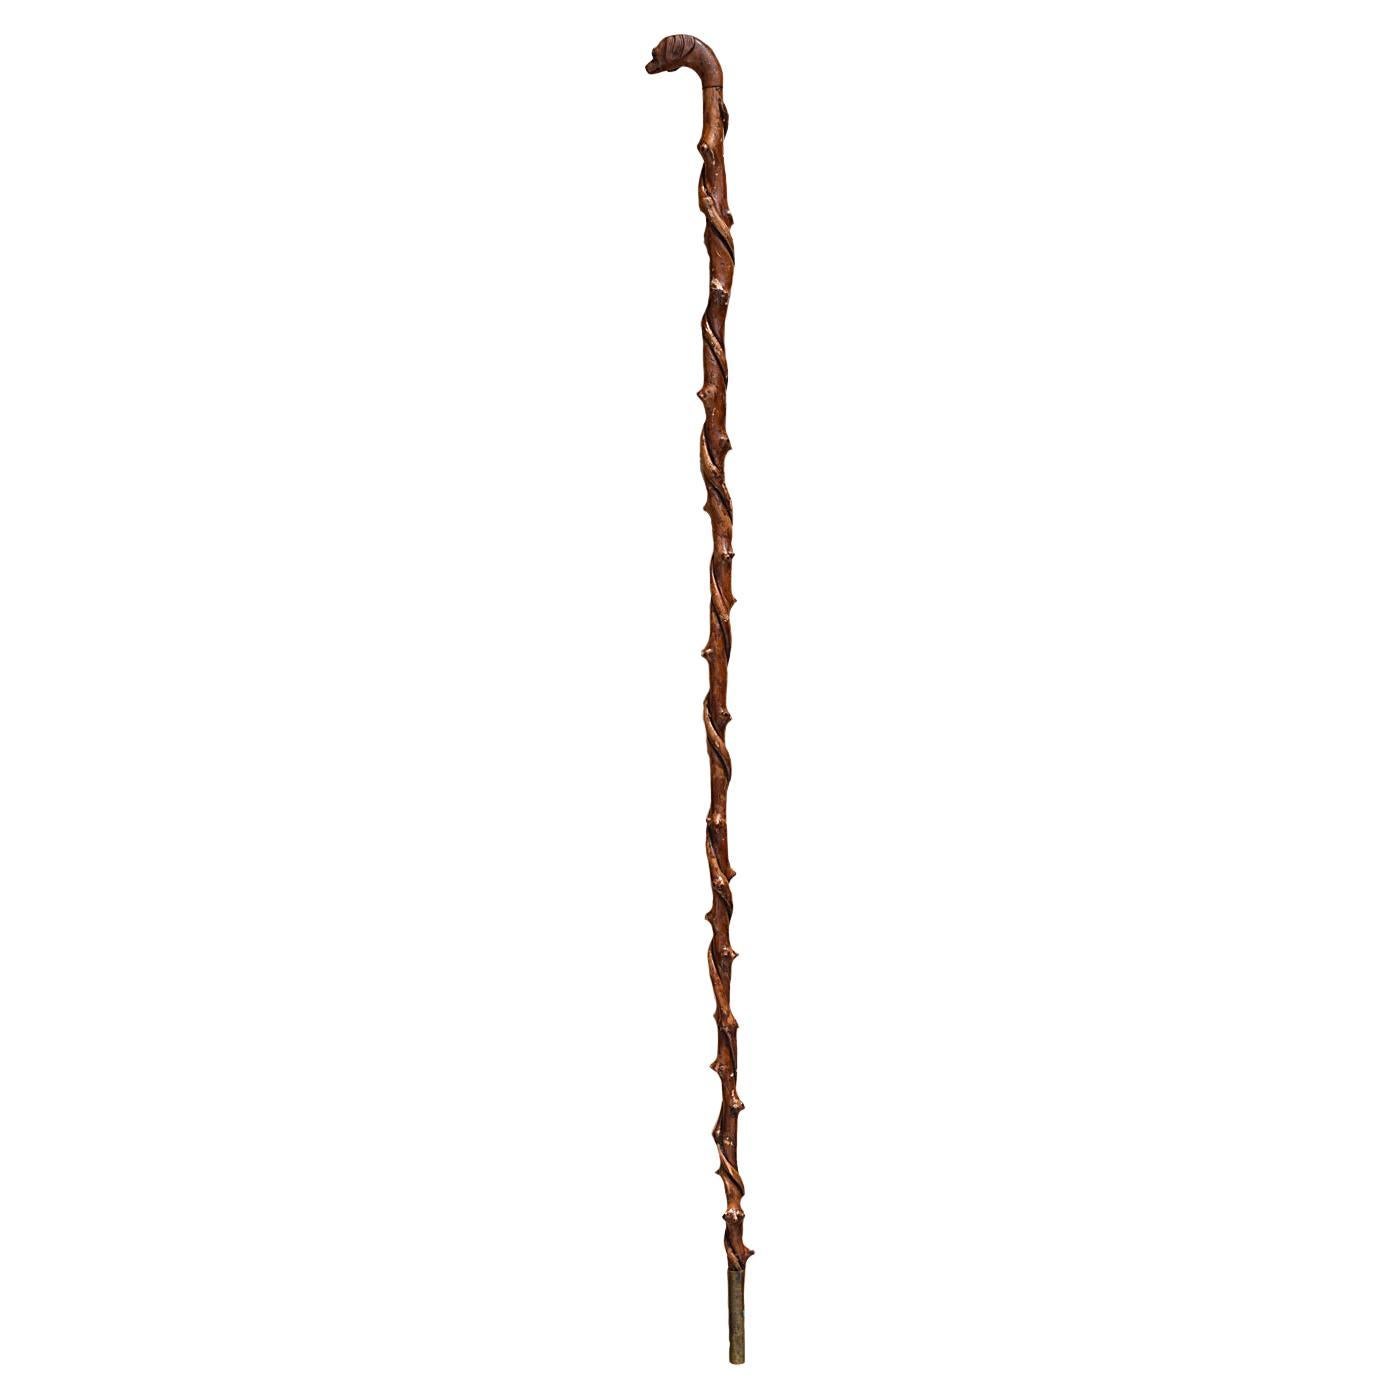 Early-20th Century English Folk Art Gentleman’s Swagger Stick